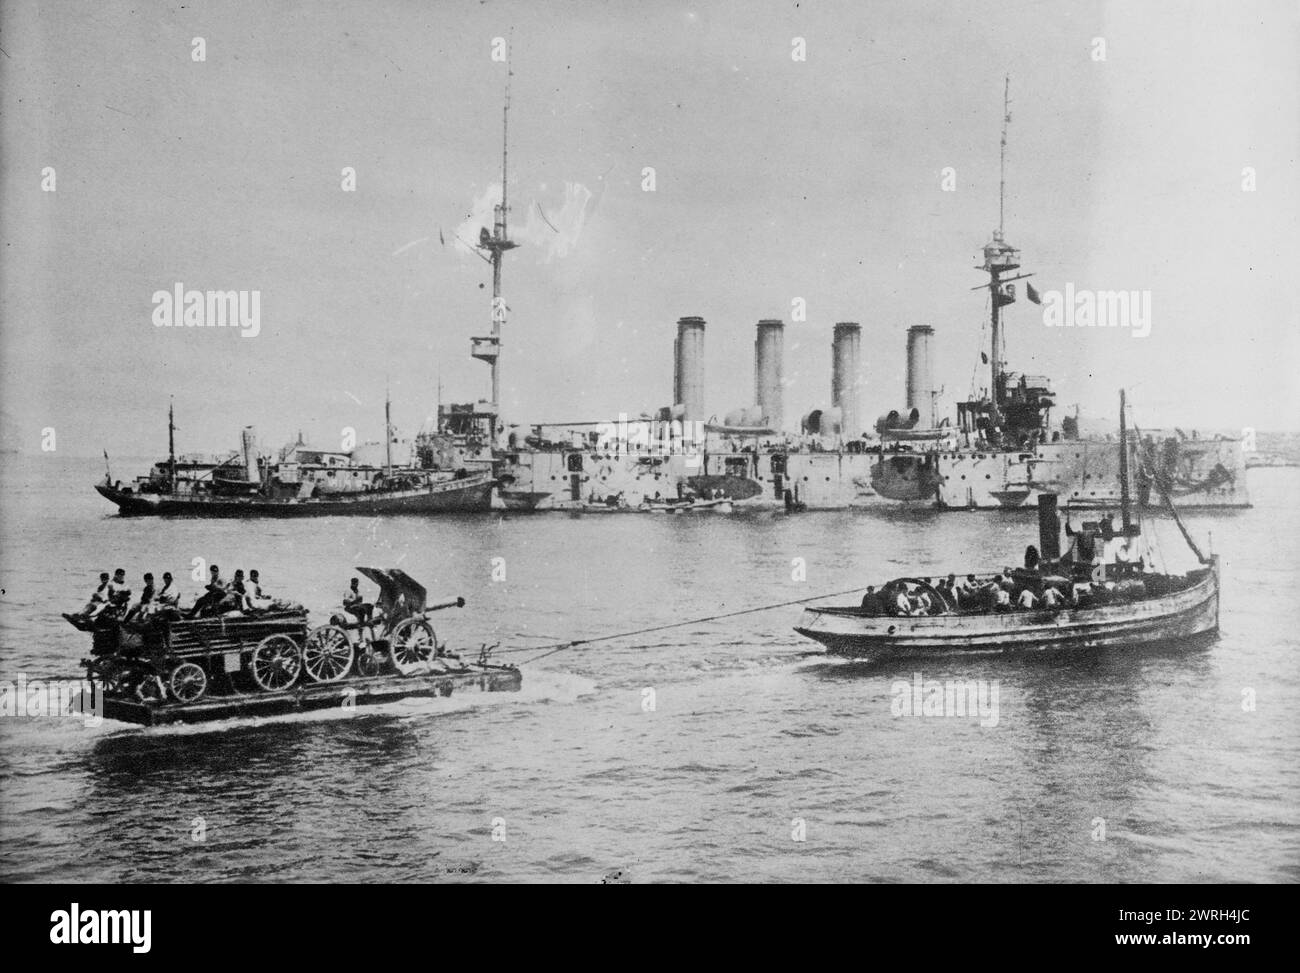 Landing a 155 mm gun at Sedd-ul [i.e., Sedd-el] Bahr, 1915. Warships near the Gallipoli Penninsula, Turkey during the Gallipoli Campaign of World War I. Stock Photo